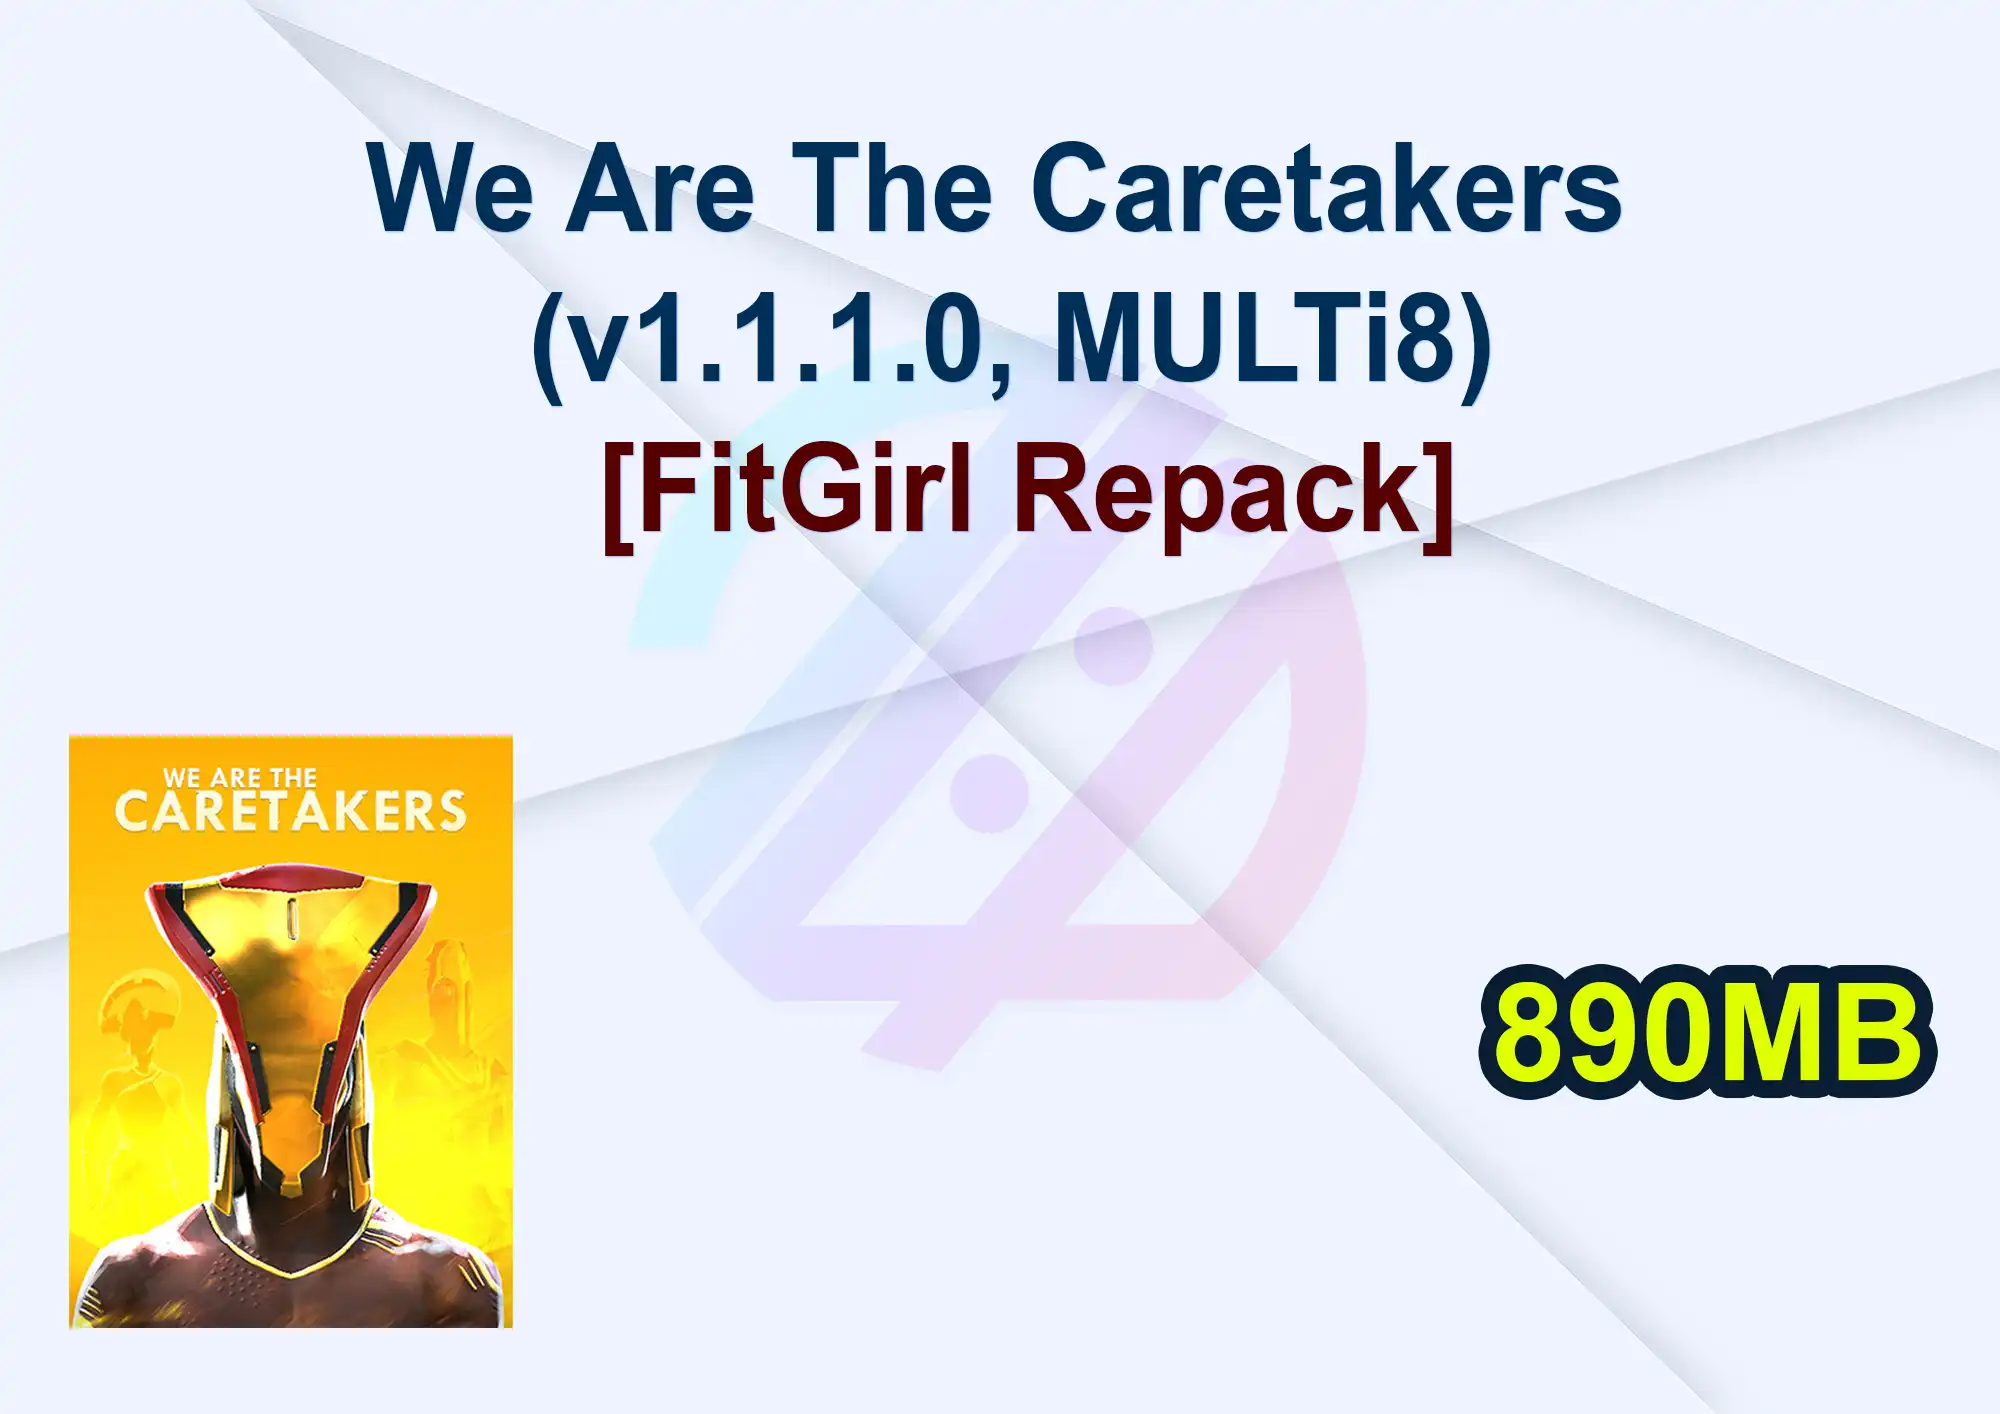 We Are The Caretakers (v1.1.1.0, MULTi8) [FitGirl Repack]